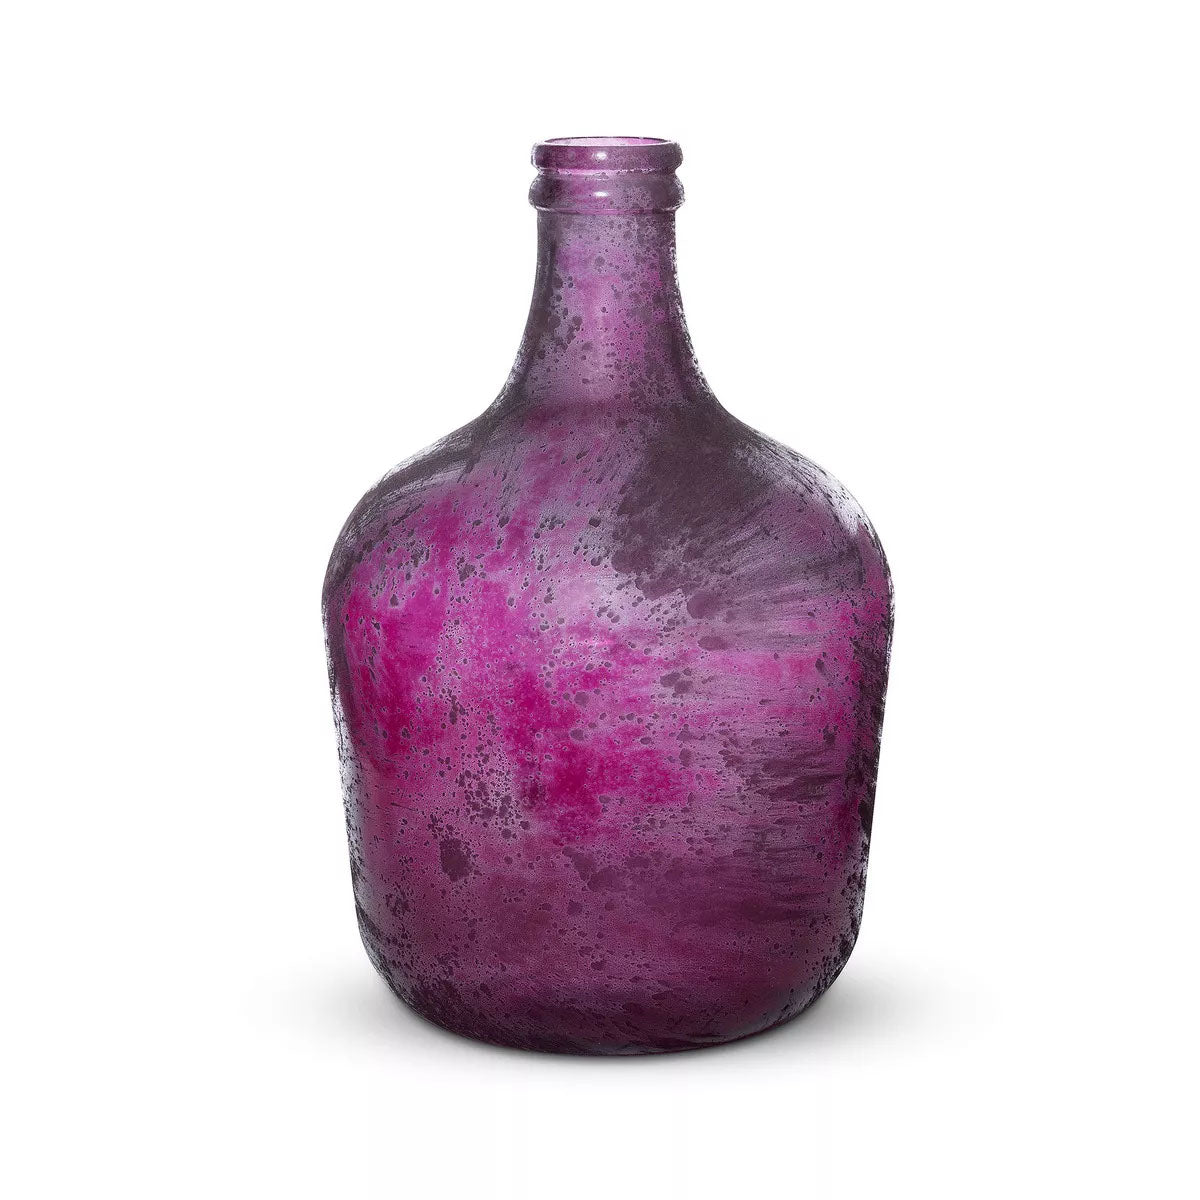 Frosted Plum Bottle Vase - Medium